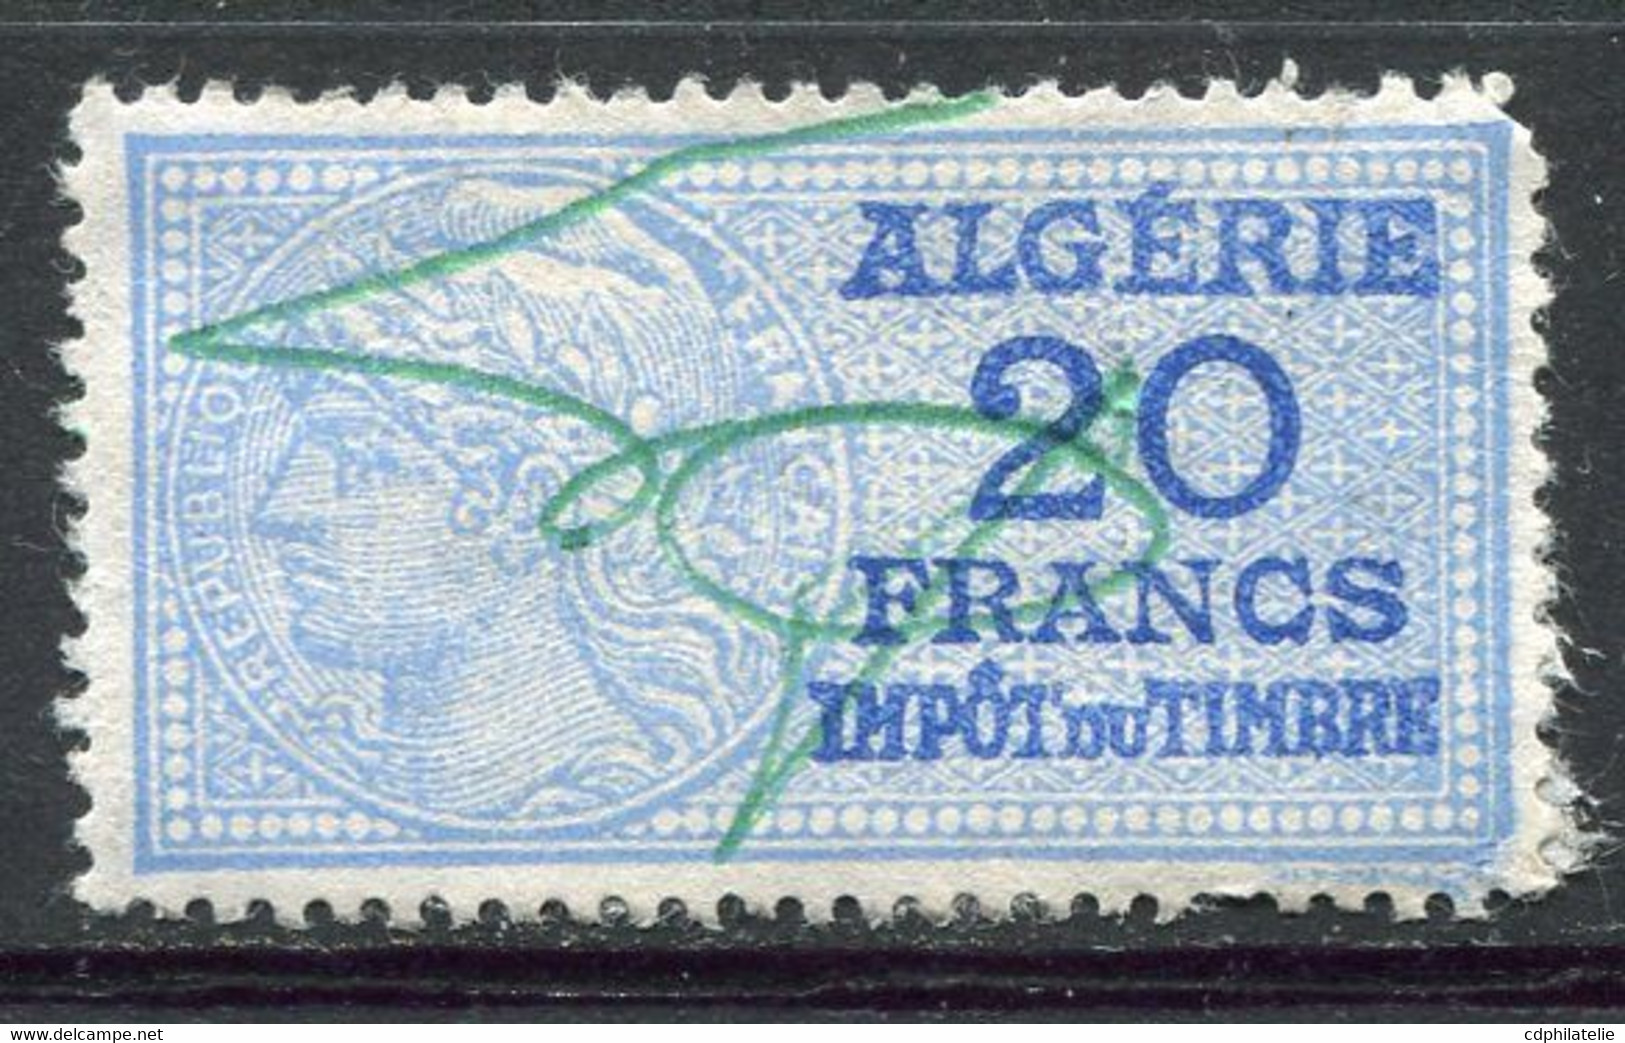 ALGERIE TIMBRE FISCAL OBLITERE  " ALGERIE  20 FRANCS IMPOT DU TIMBRE " - Used Stamps